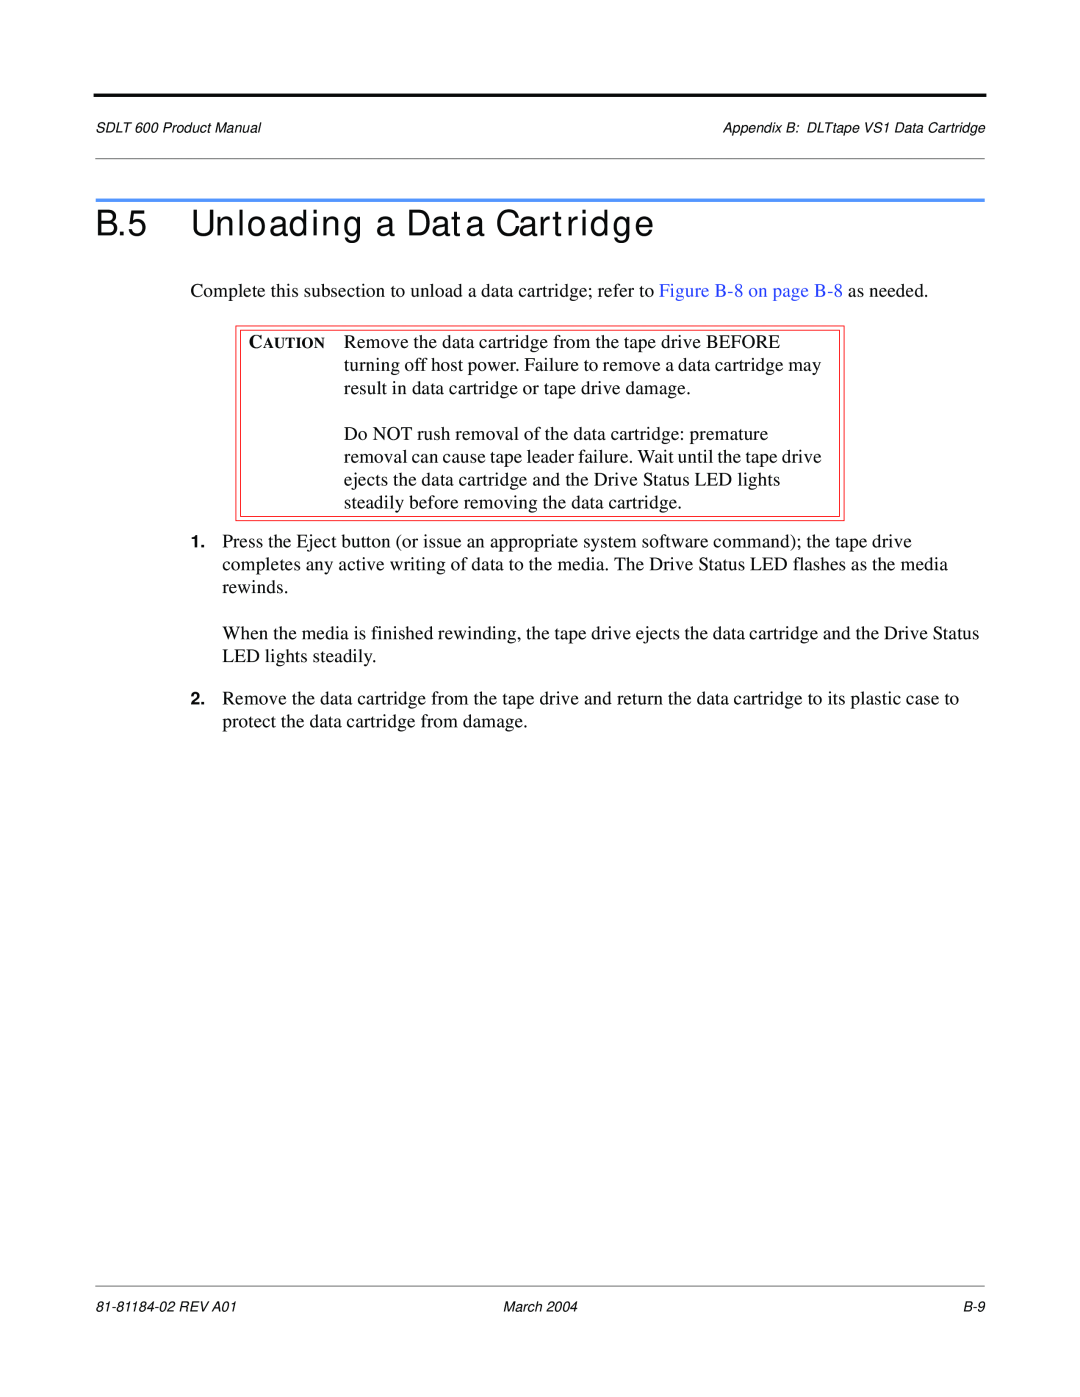 Tandberg Data manual B.5 Unloading a Data Cartridge, SDLT 600 Product Manual, REV A01, March 